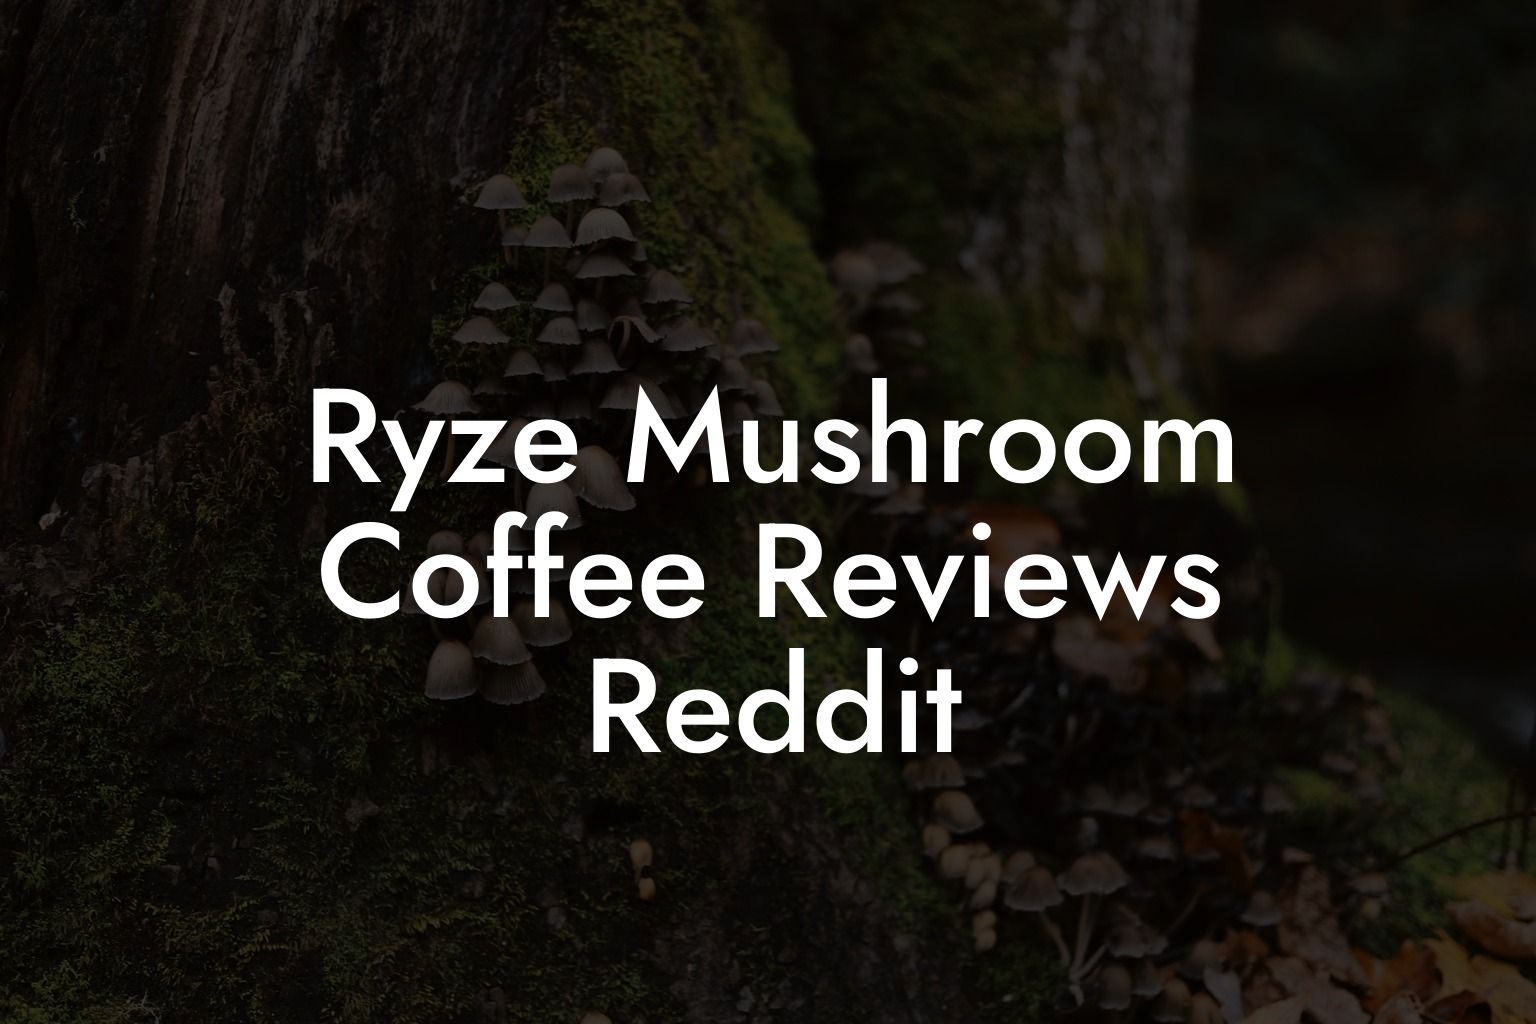 Ryze Mushroom Coffee Reviews Reddit